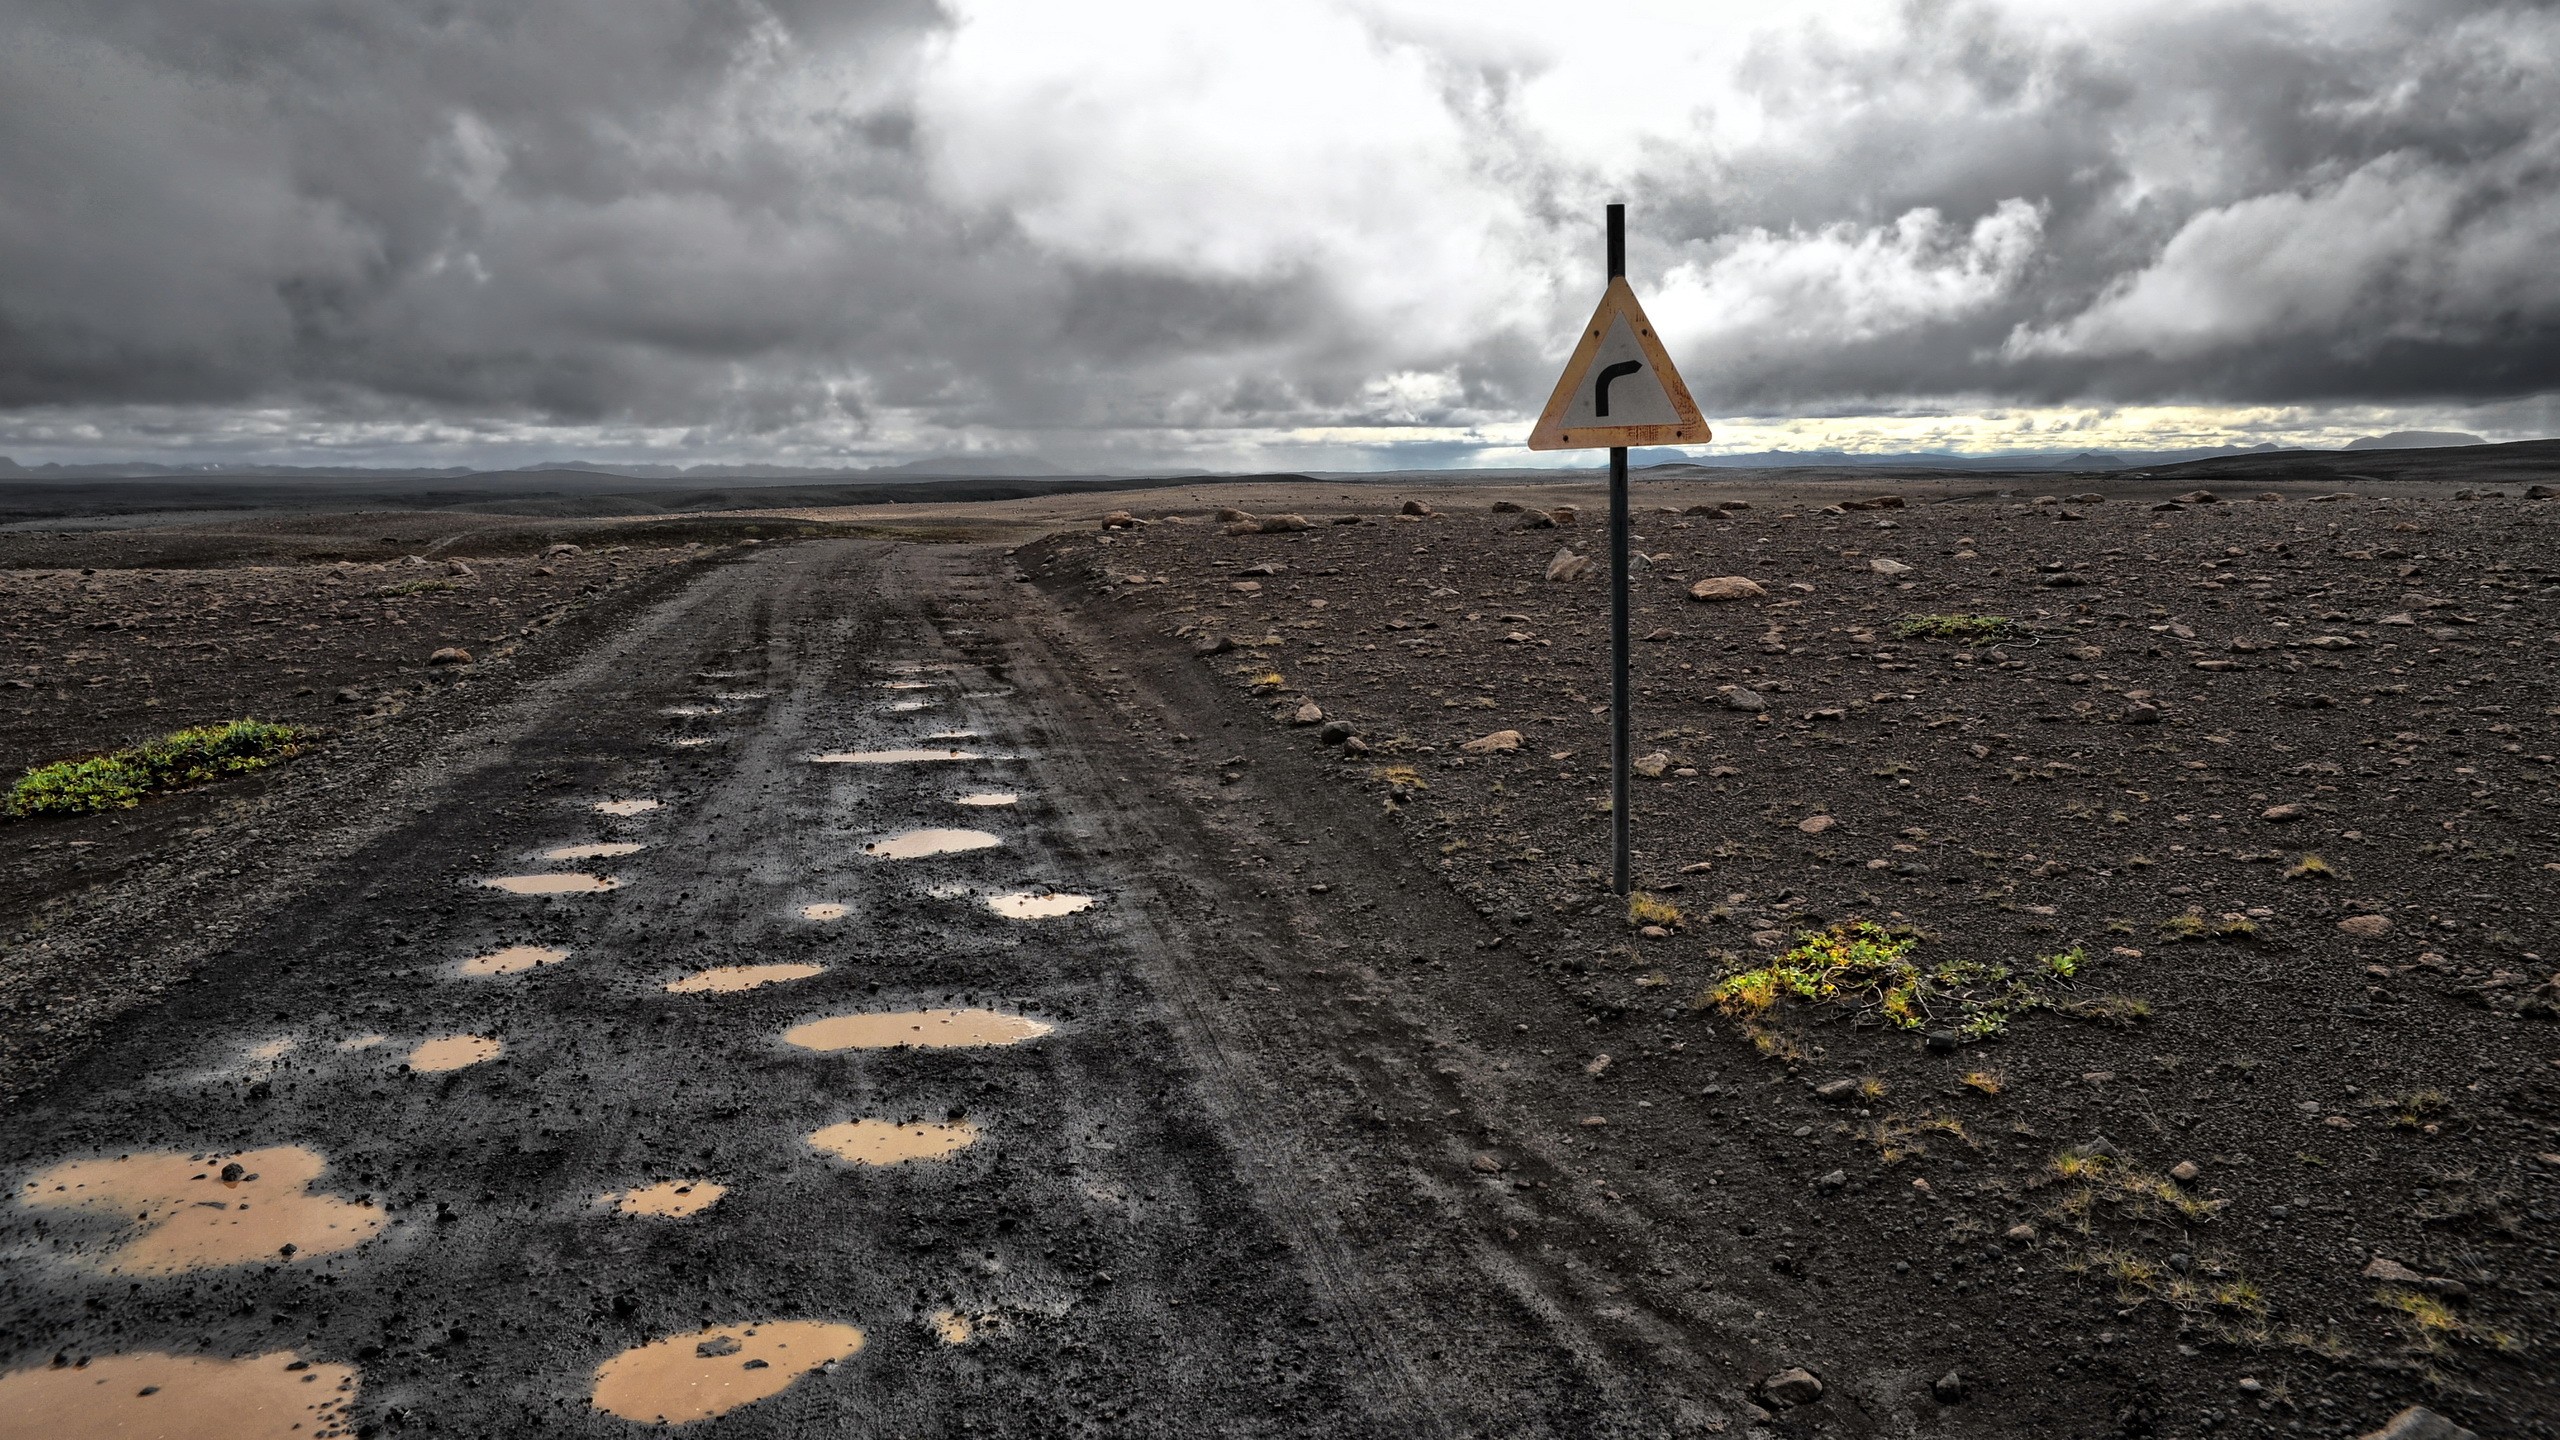 General 2560x1440 landscape mud road sign dirt road puddle dirt plains outdoors clouds